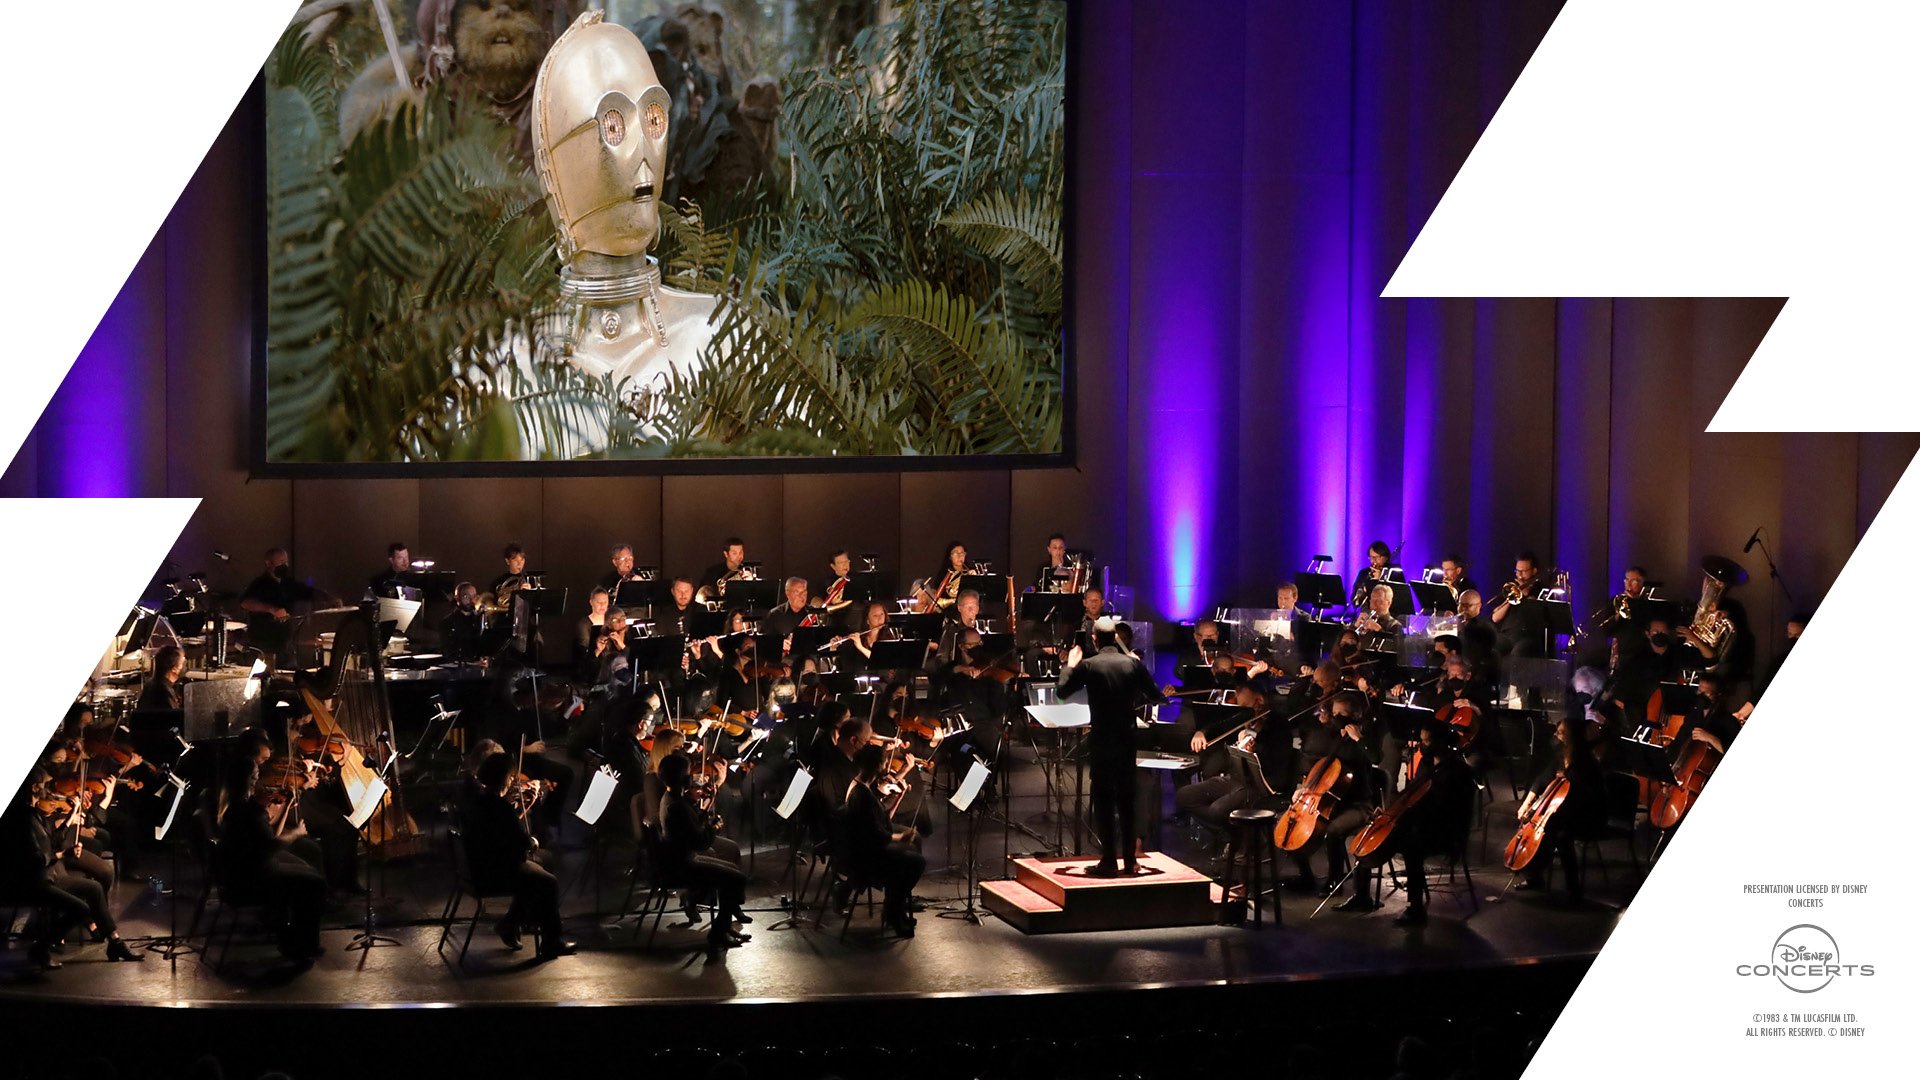 Image Star Wars: Return of the Jedi in Concert!